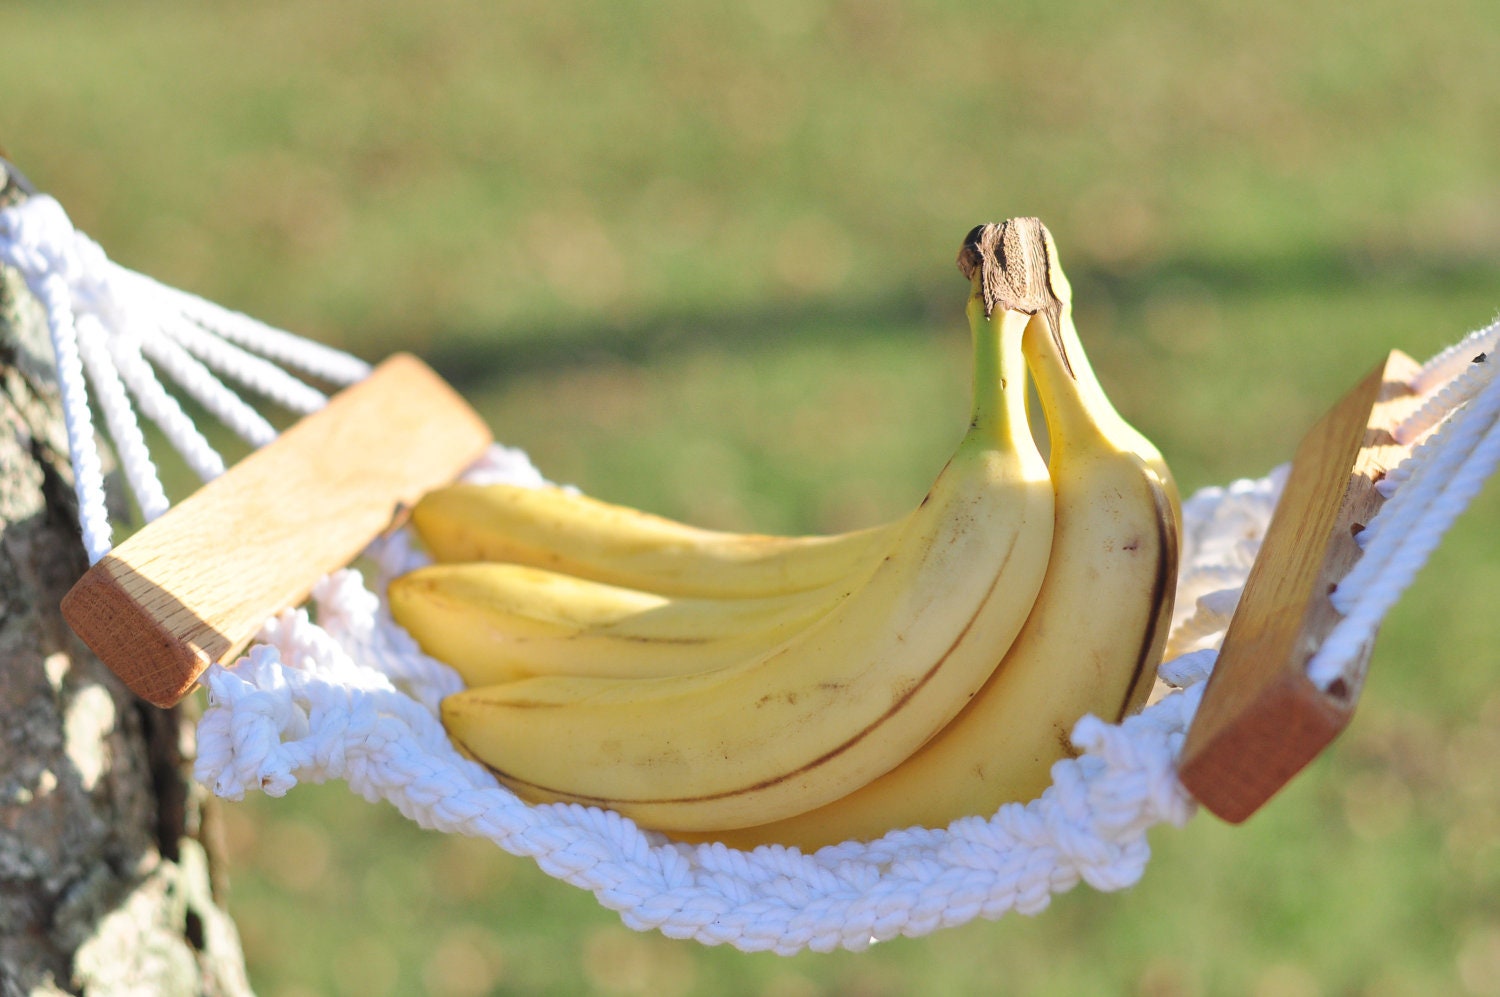 Banana hammock pictures